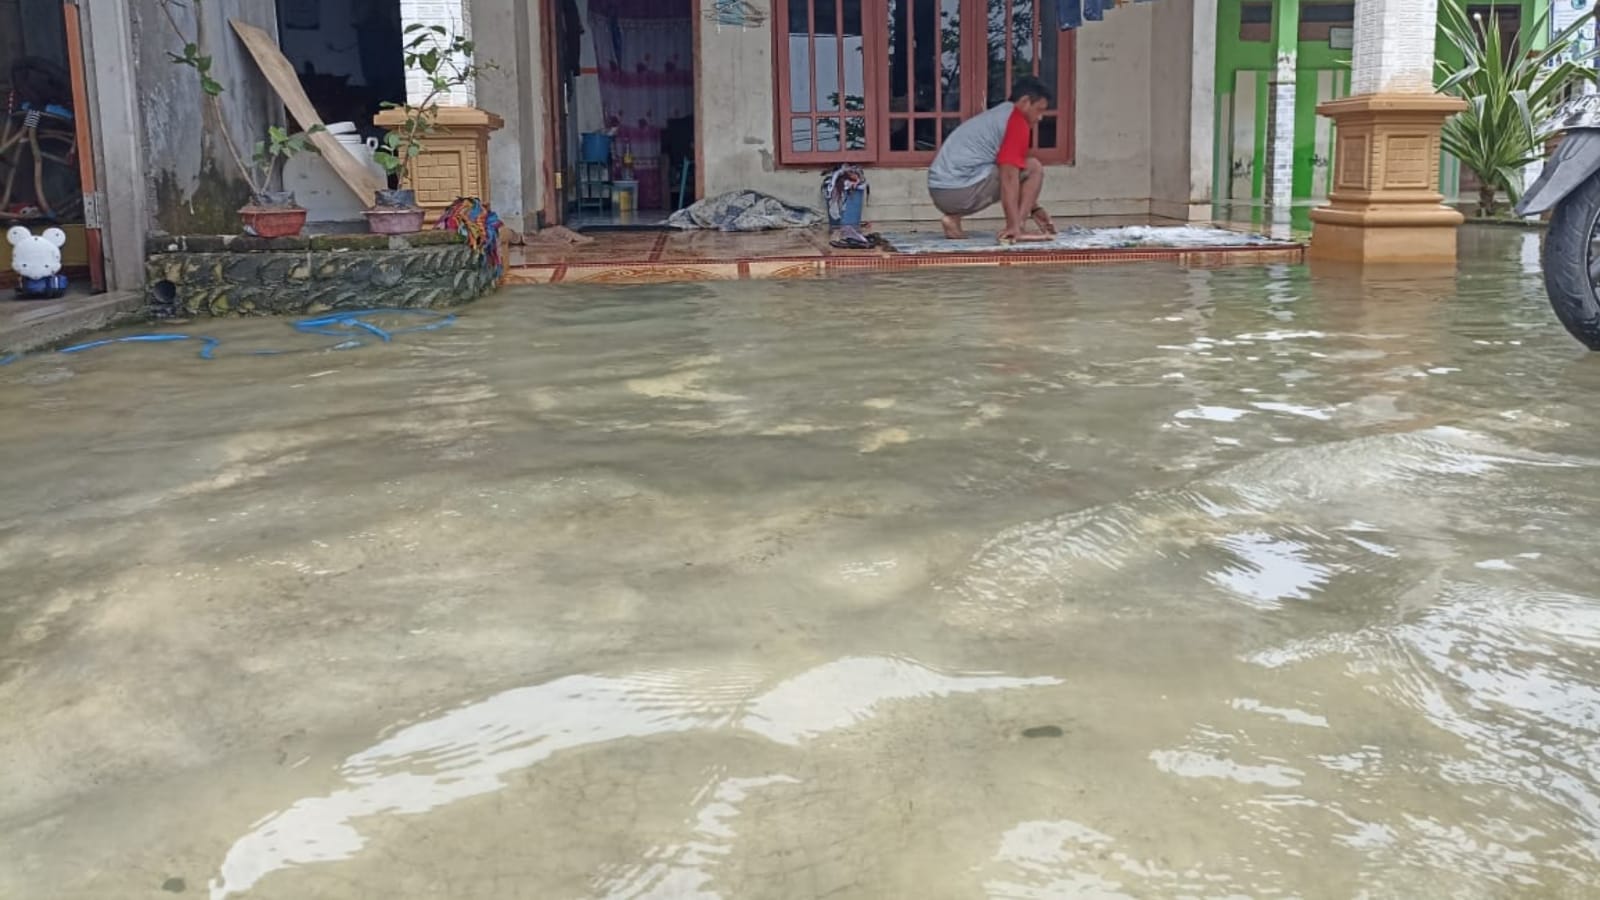 Cerita Warga Jombang Jadi Langganan Banjir Sejak Tahun 1970-an